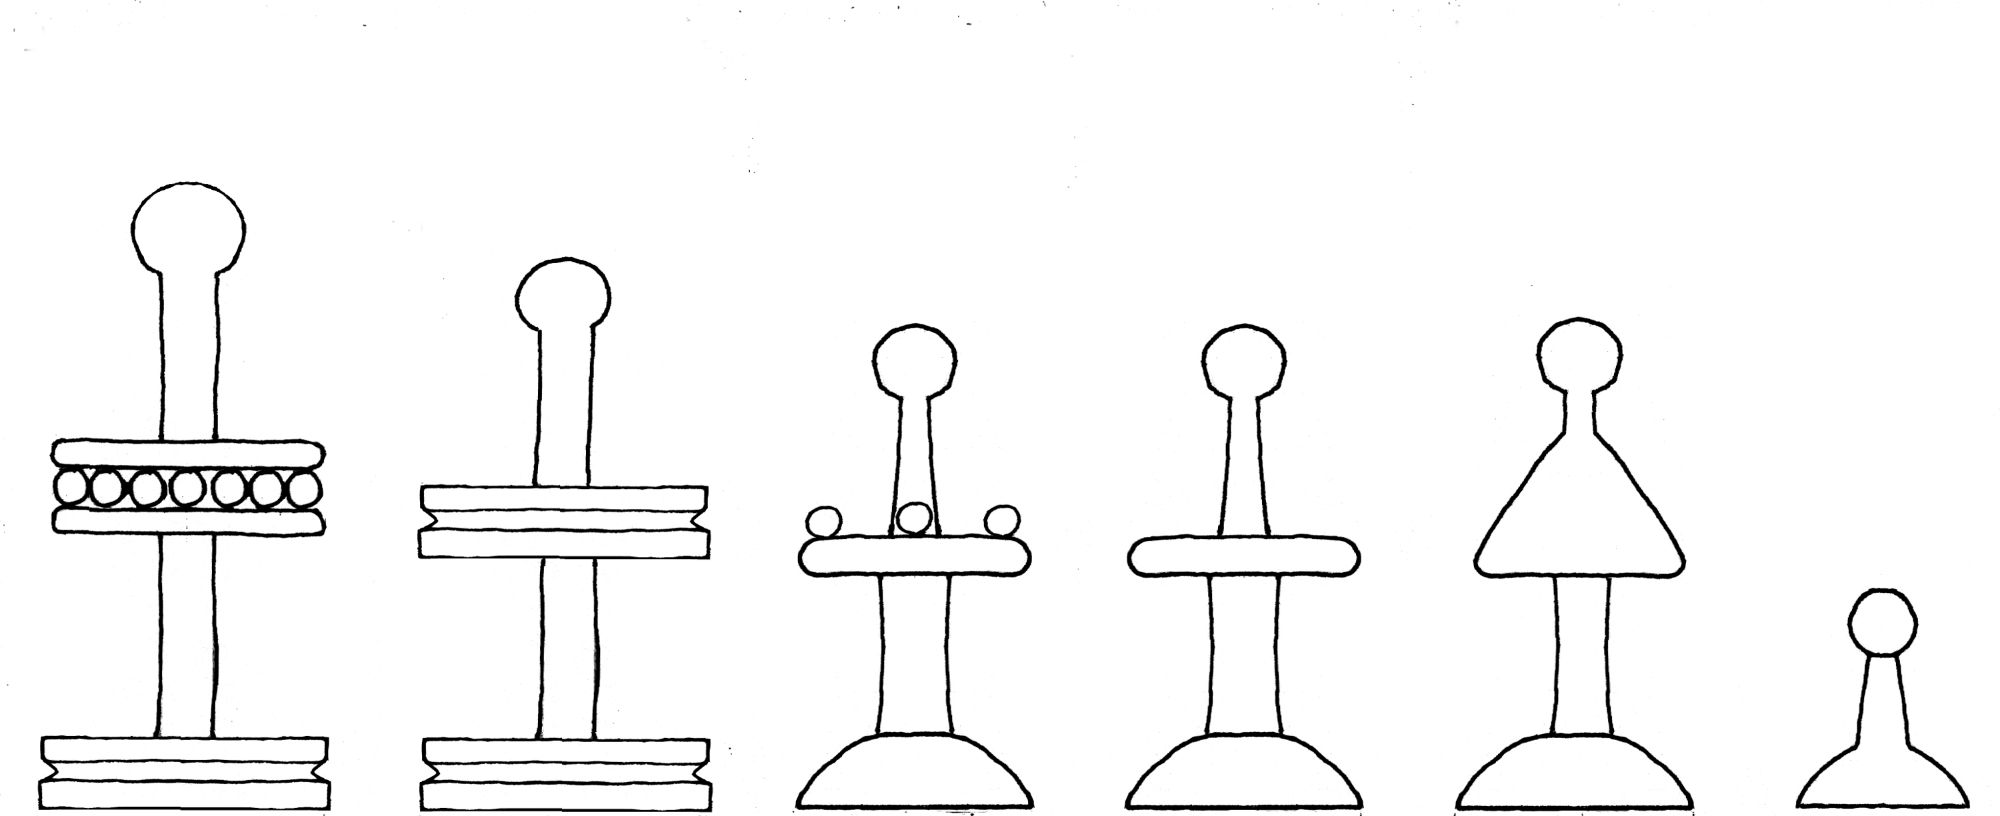 Regnault de Montauban chess set interpretive diagram